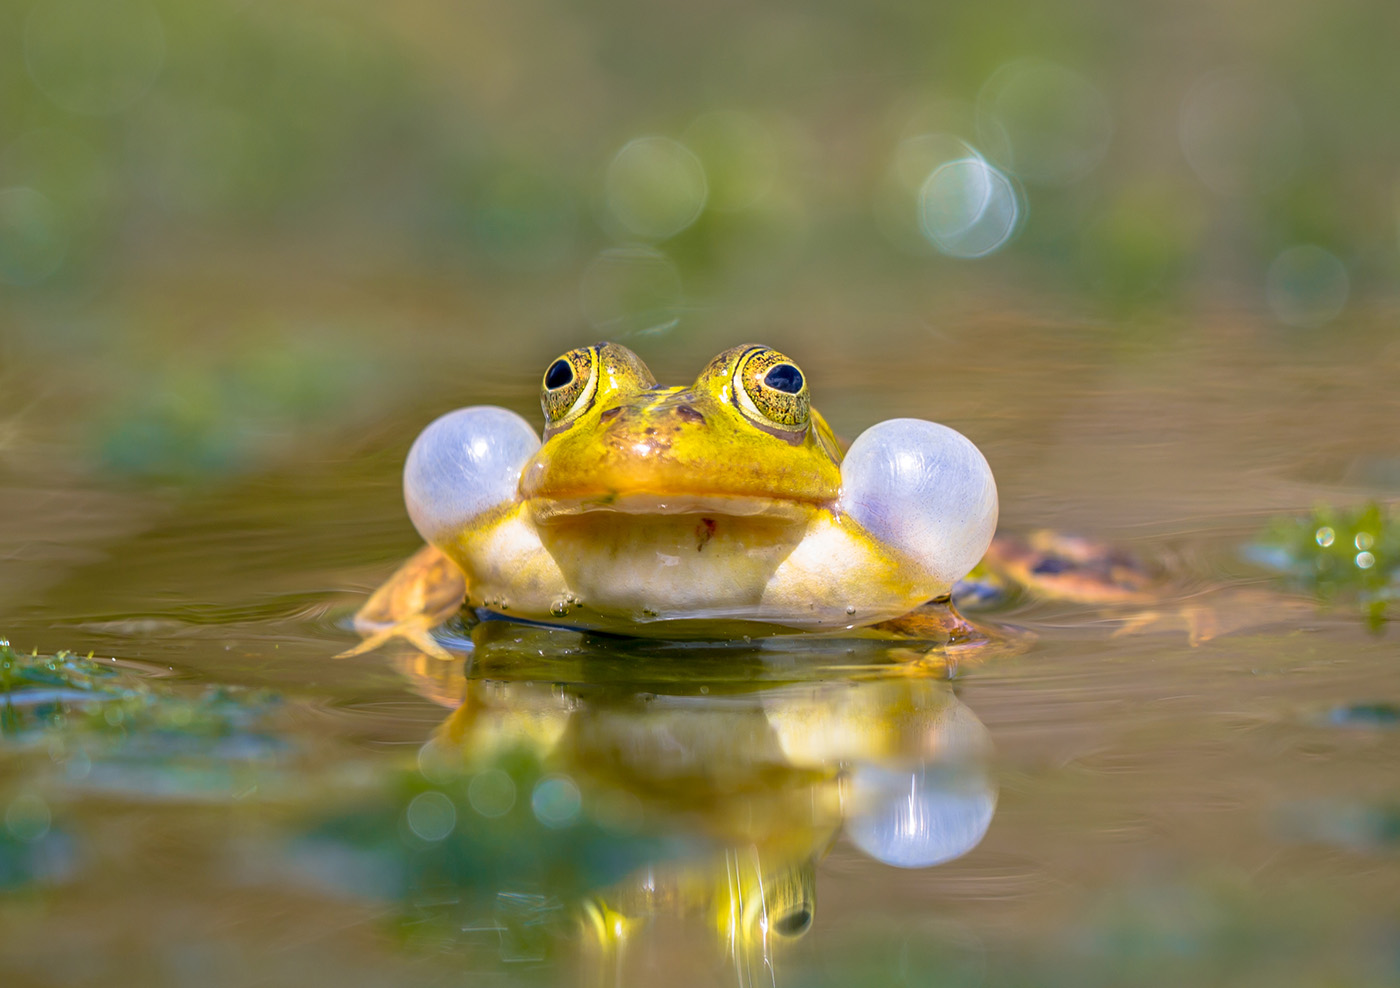 Male Pool frog Pelophylax lessonae calling